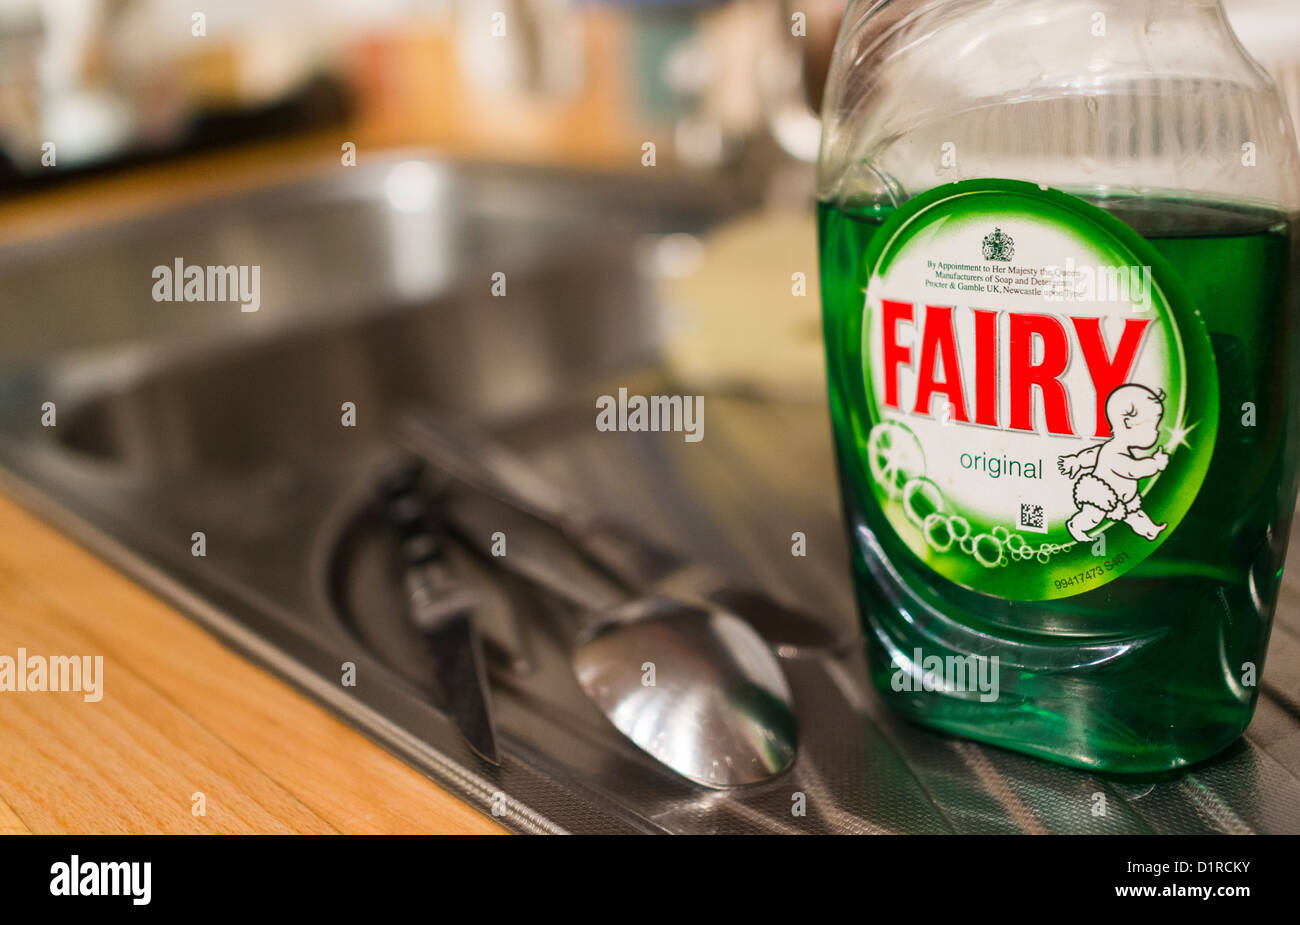 A bottle of Fairy Original washing up liquid. Stock Photo